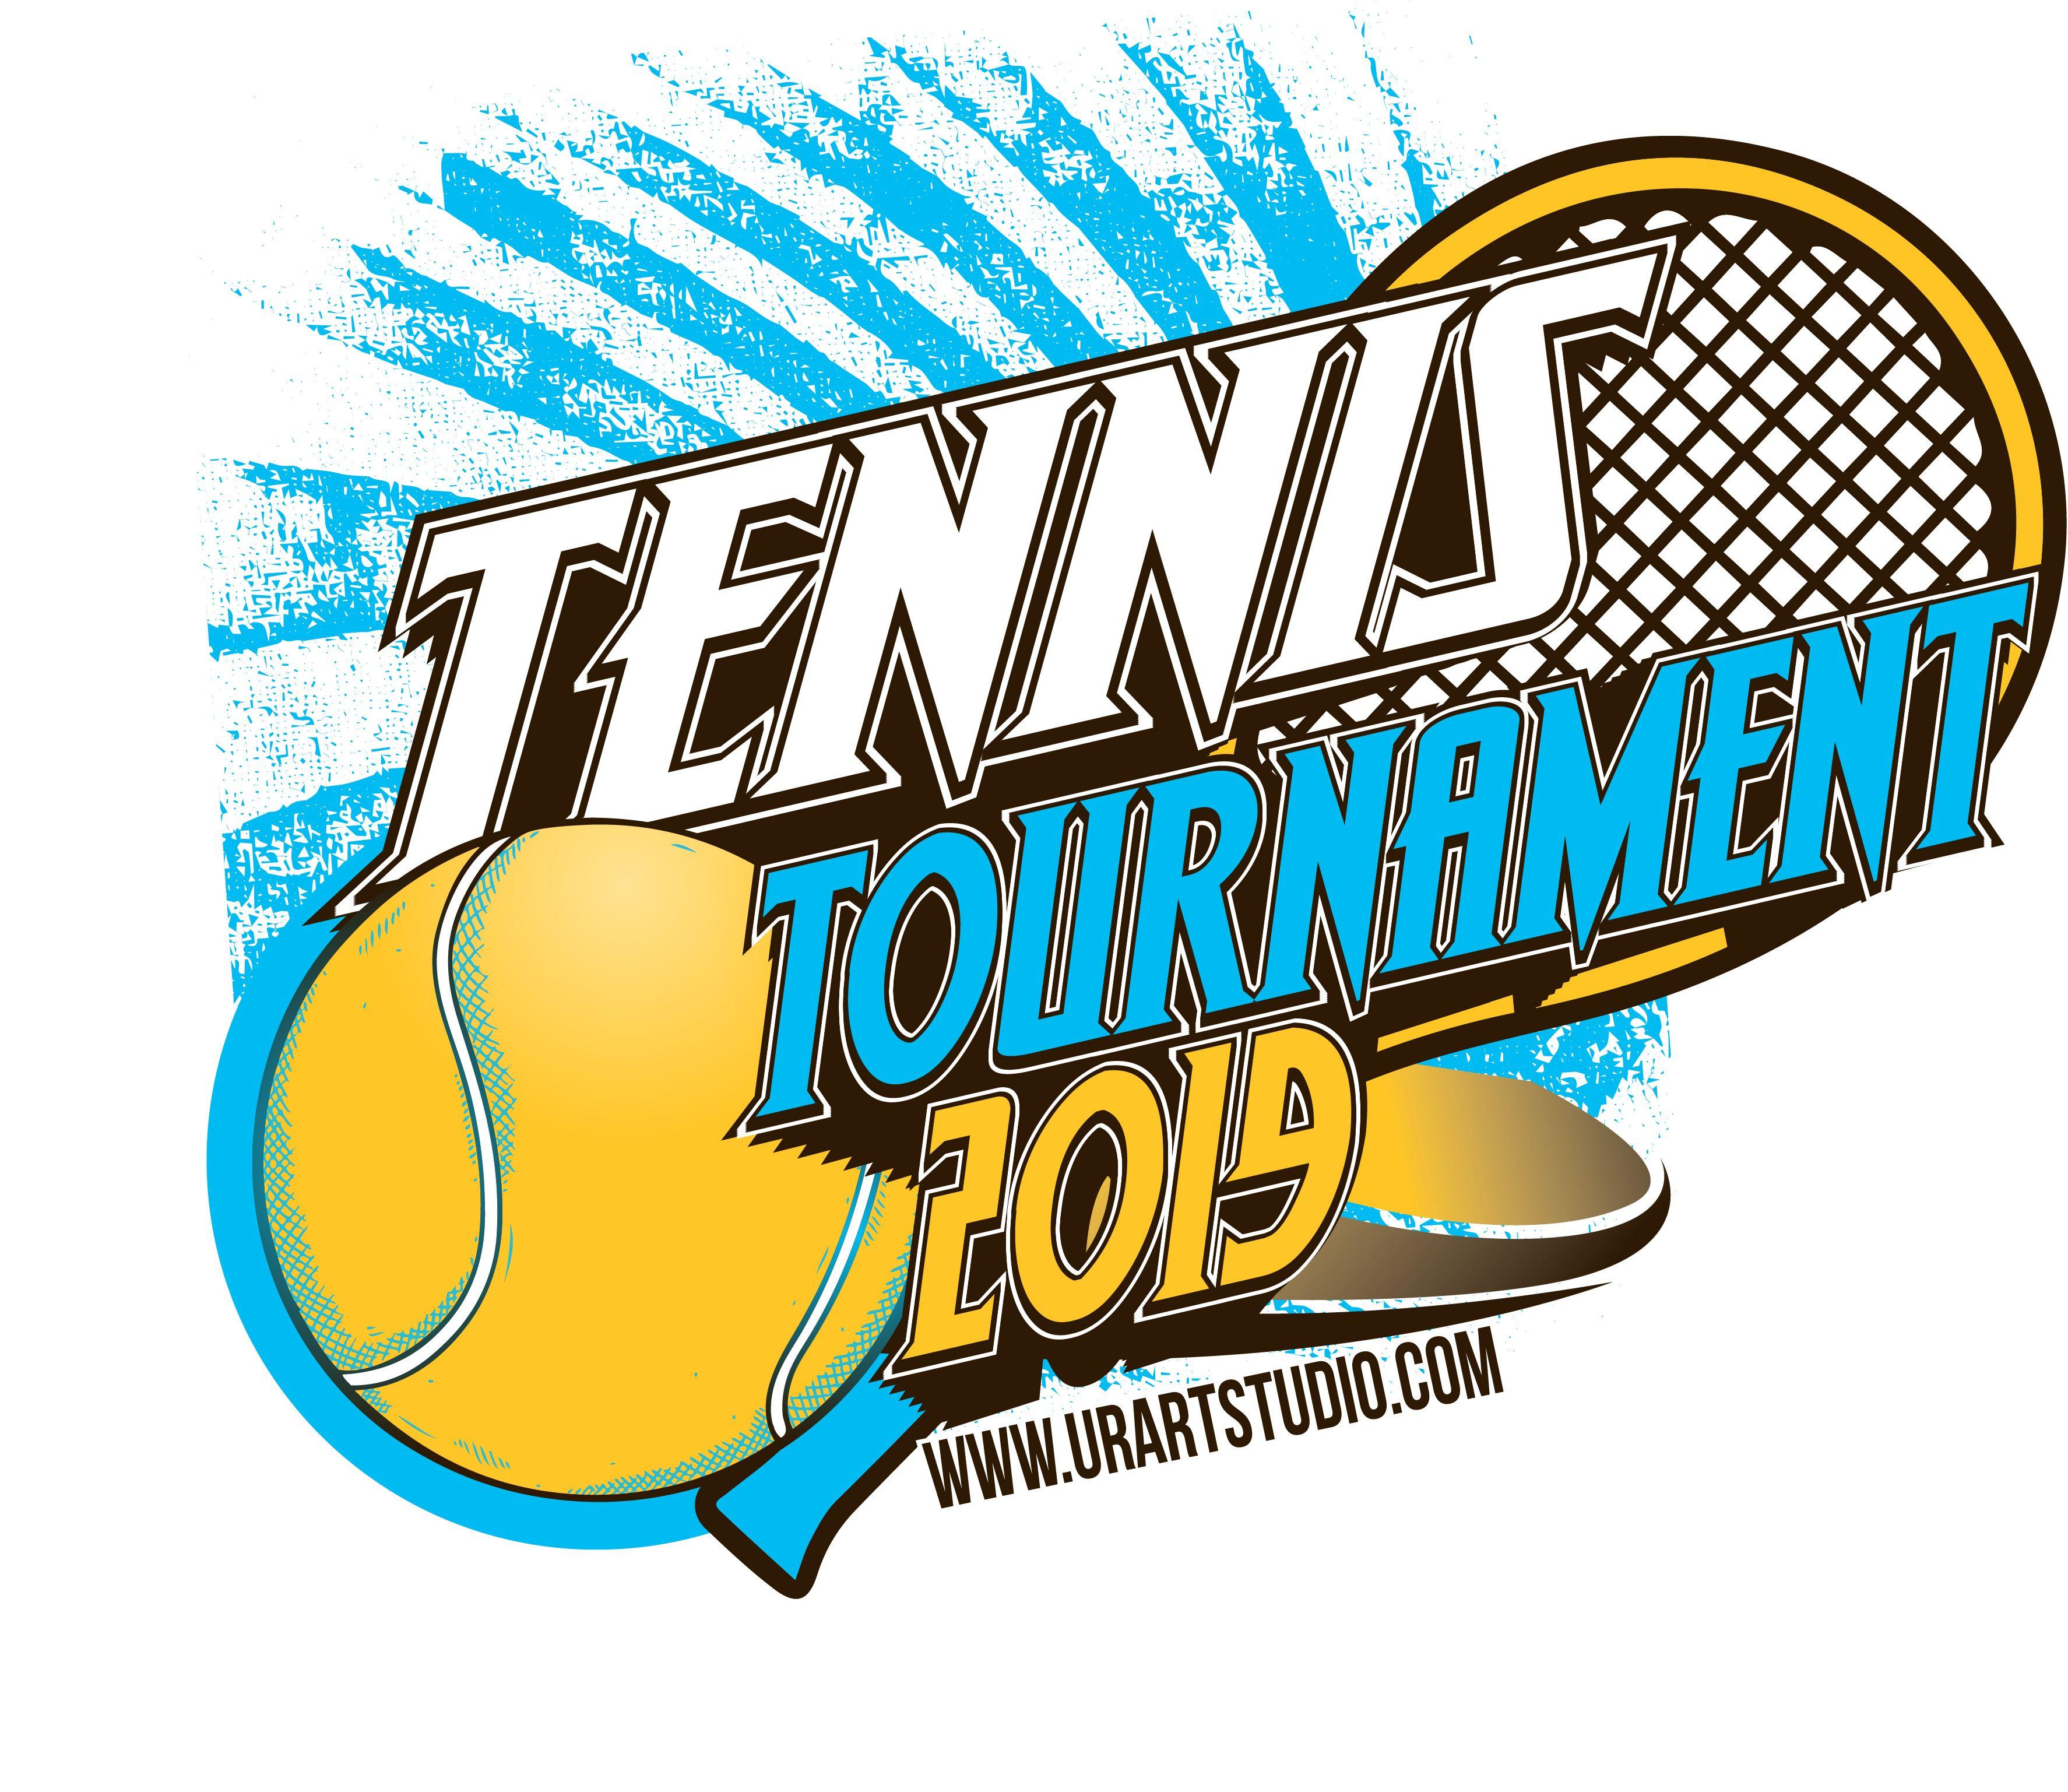 Tournament Logo - TENNIS TOURNAMENT 2019 T-shirt vector logo design for print ...